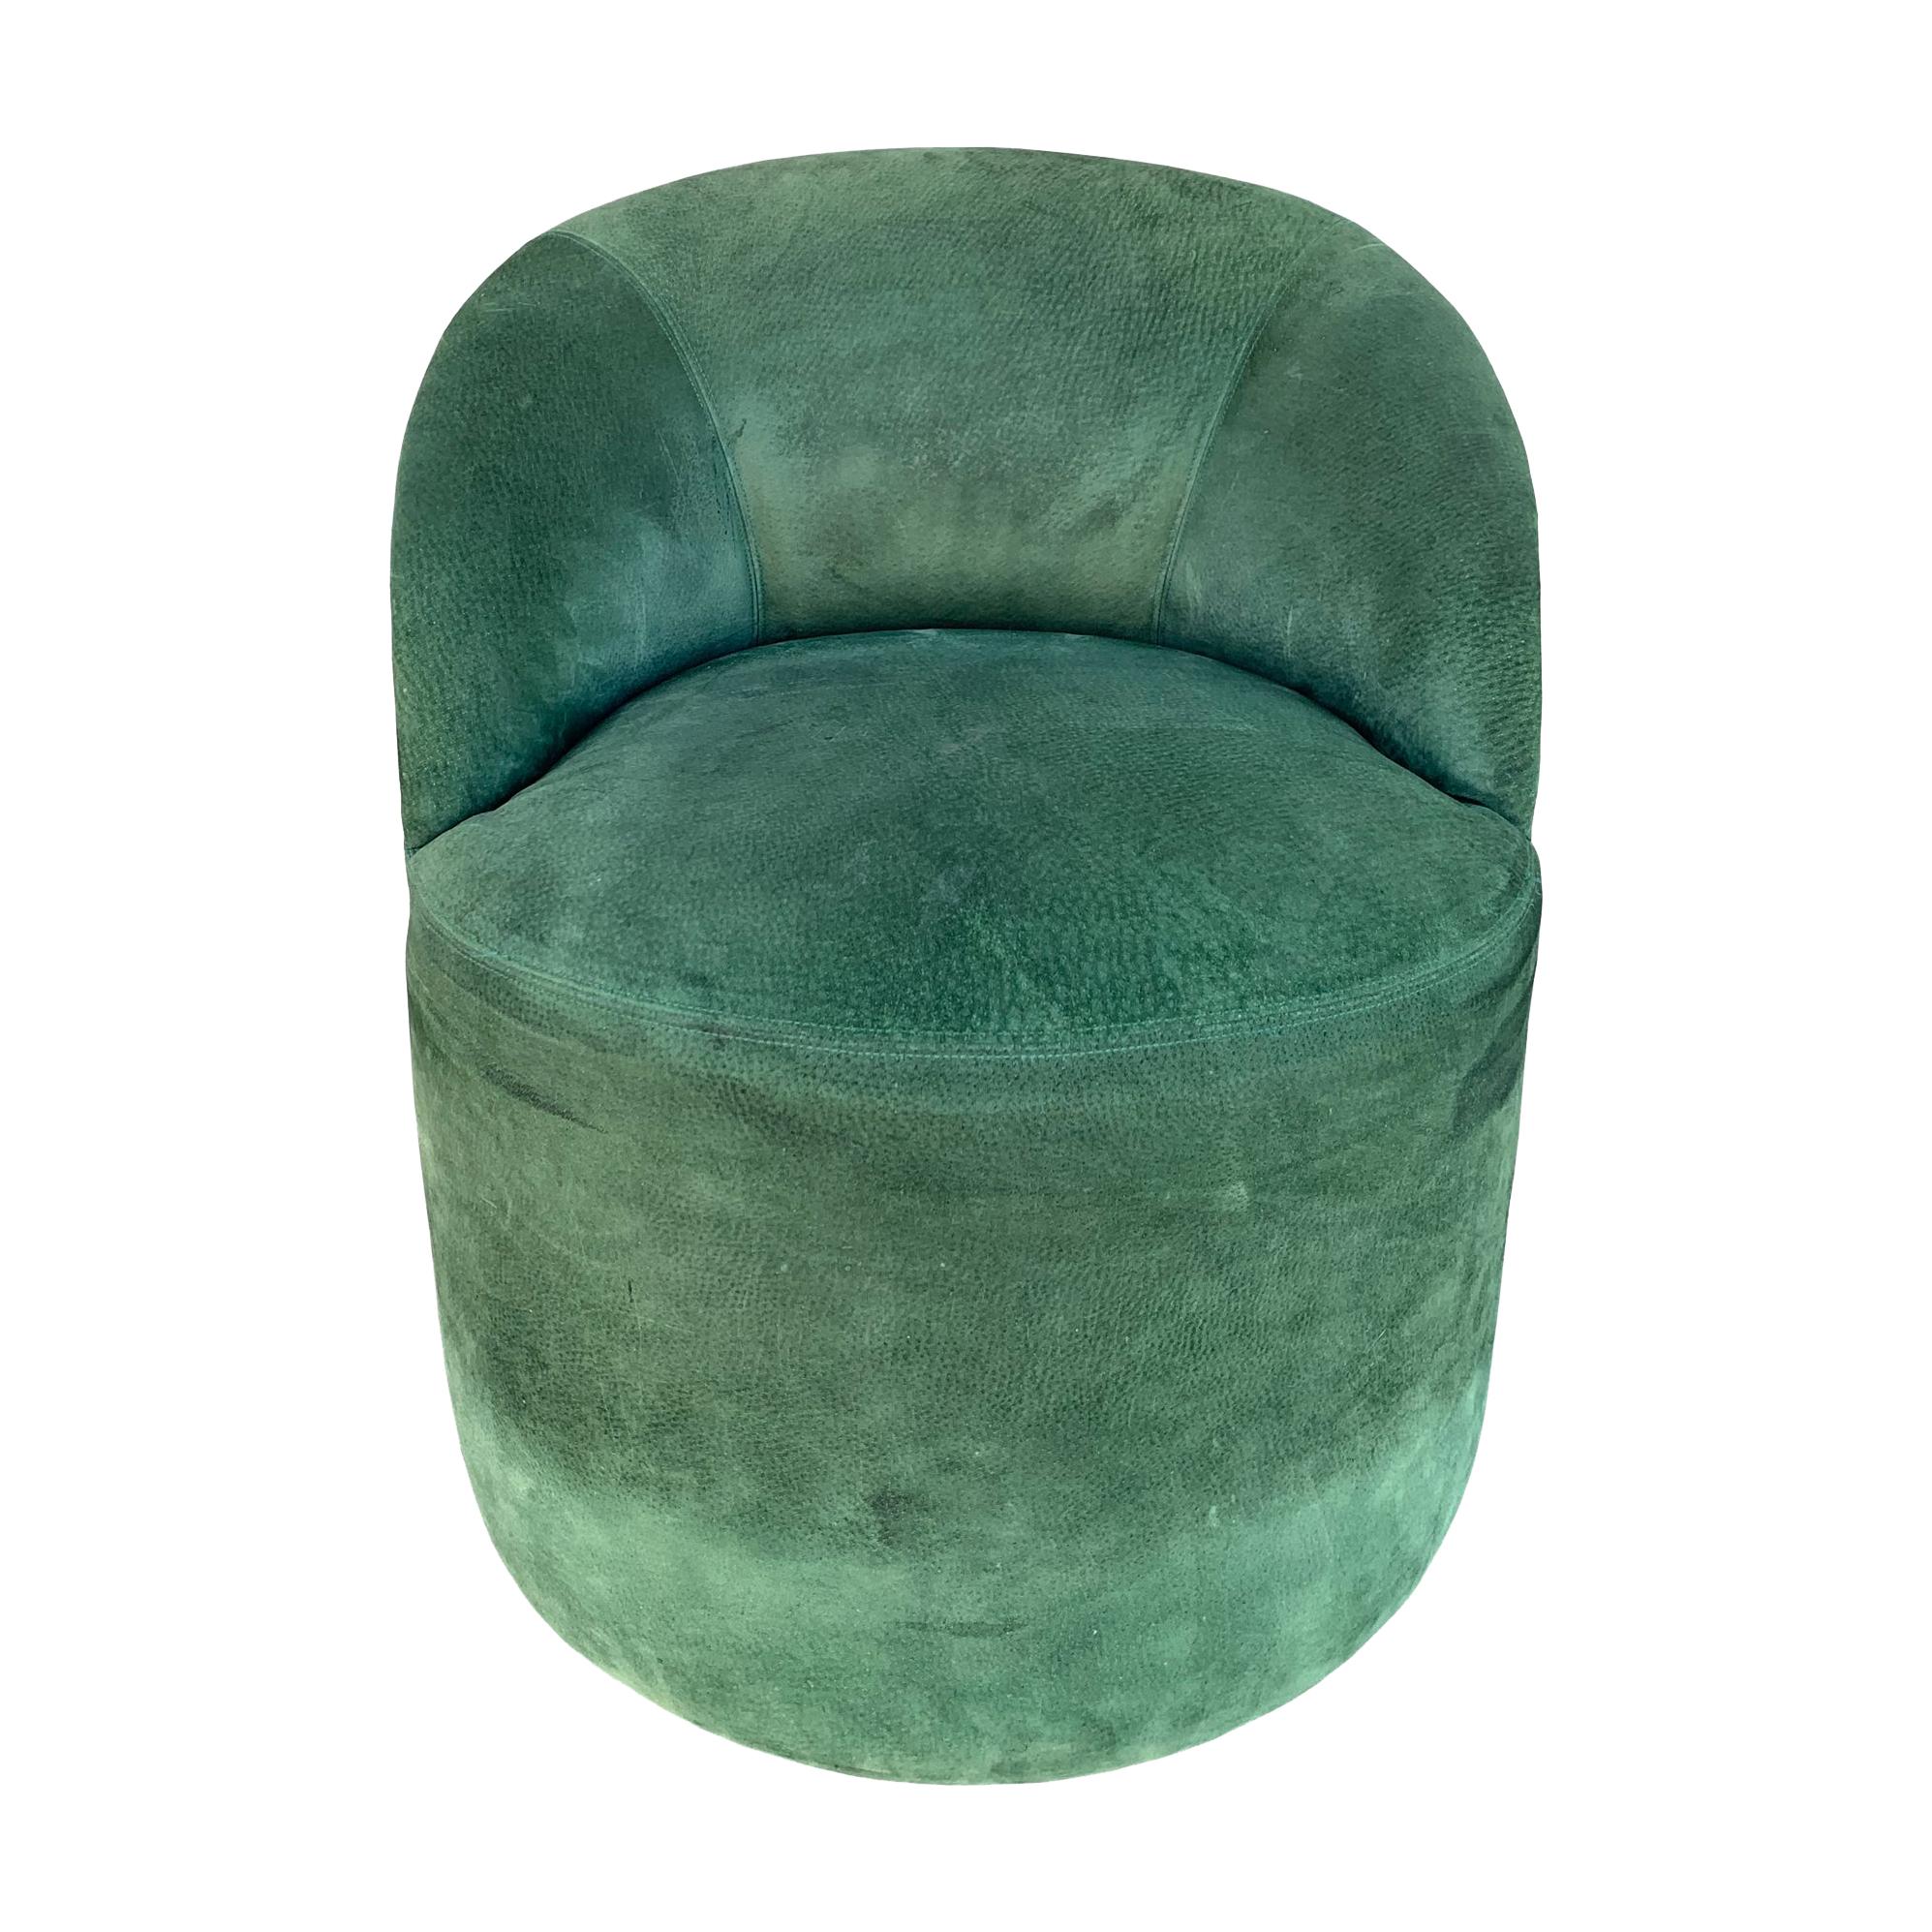 Vintage Barrel Chair Upholstered in Green Suede